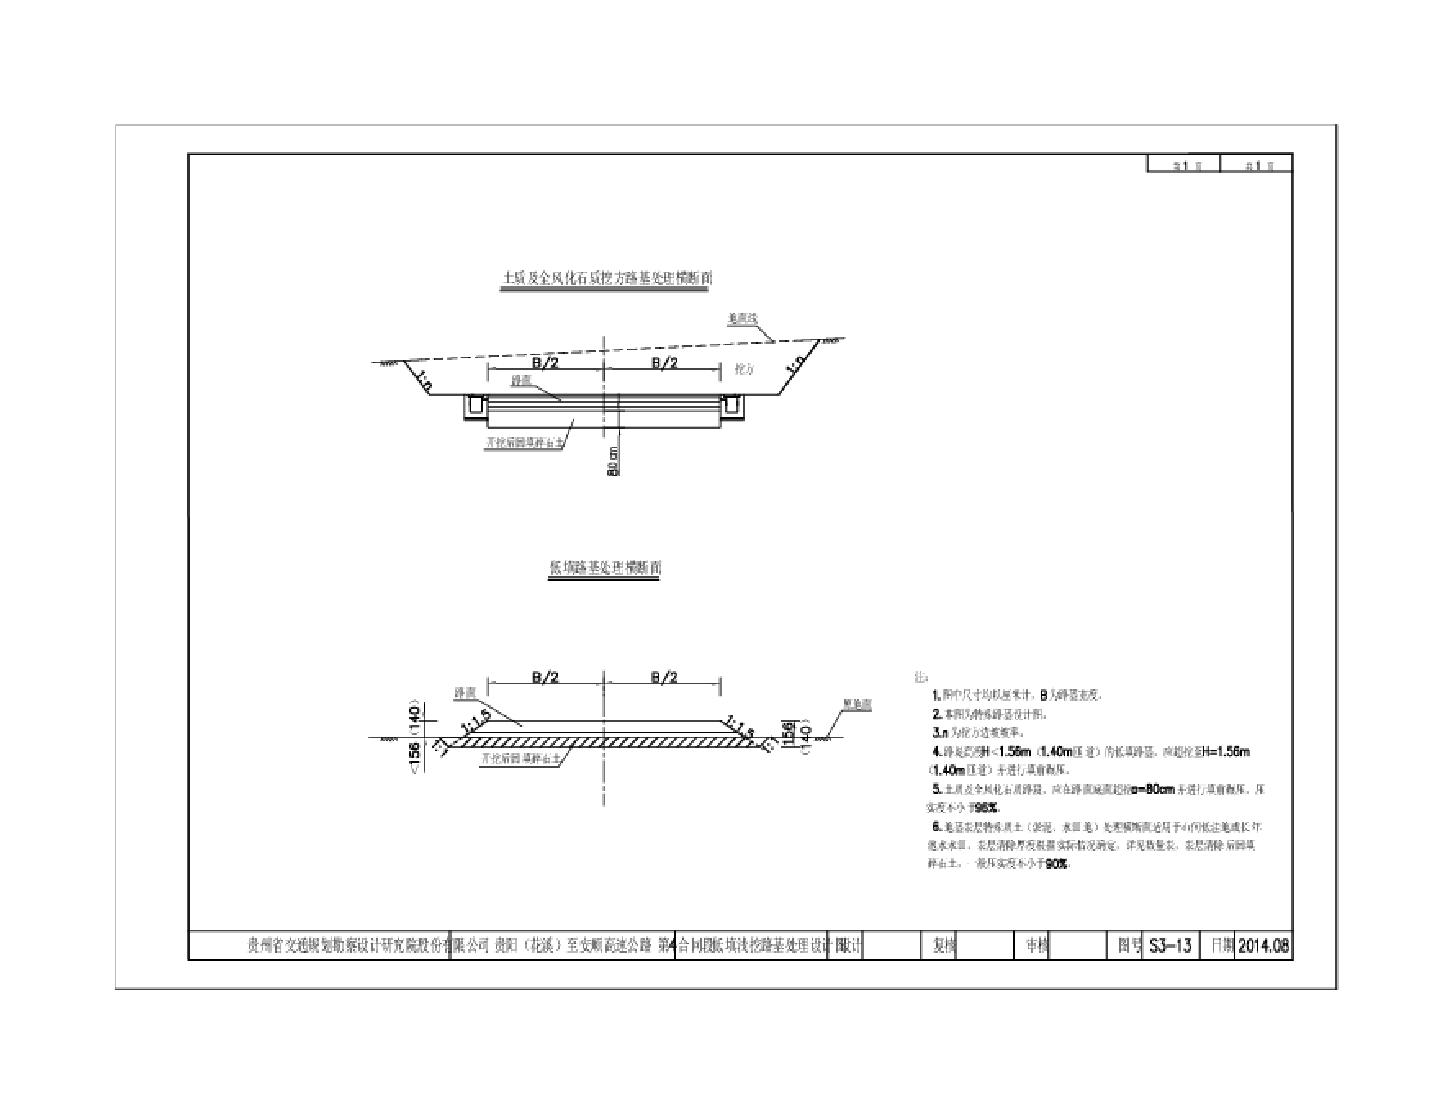 S3-13低填浅挖路基处理设计图